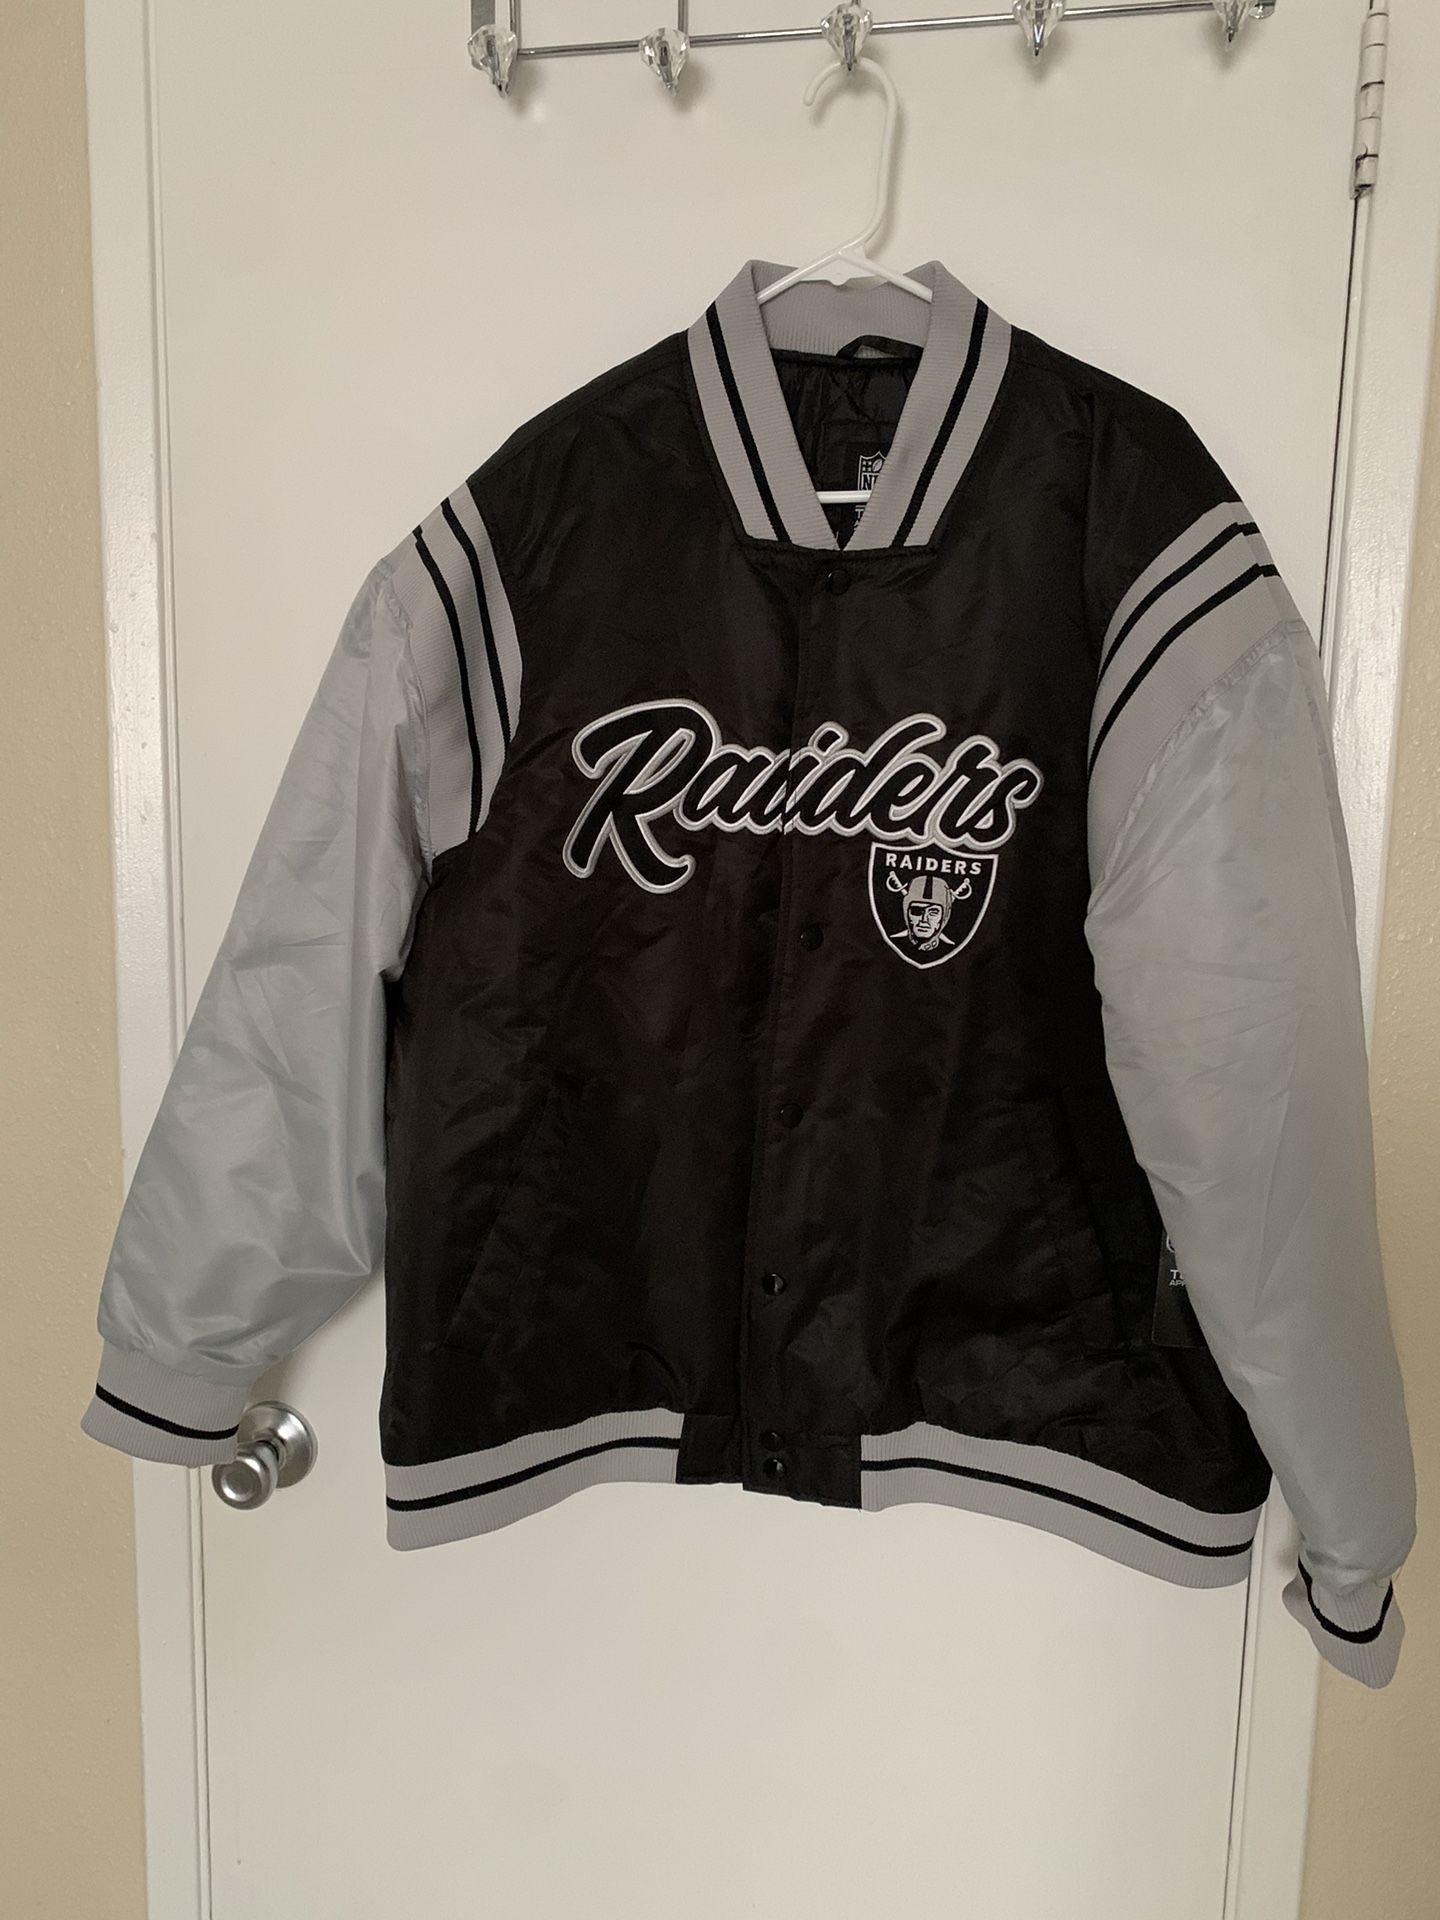 XL Raiders Jacket $60